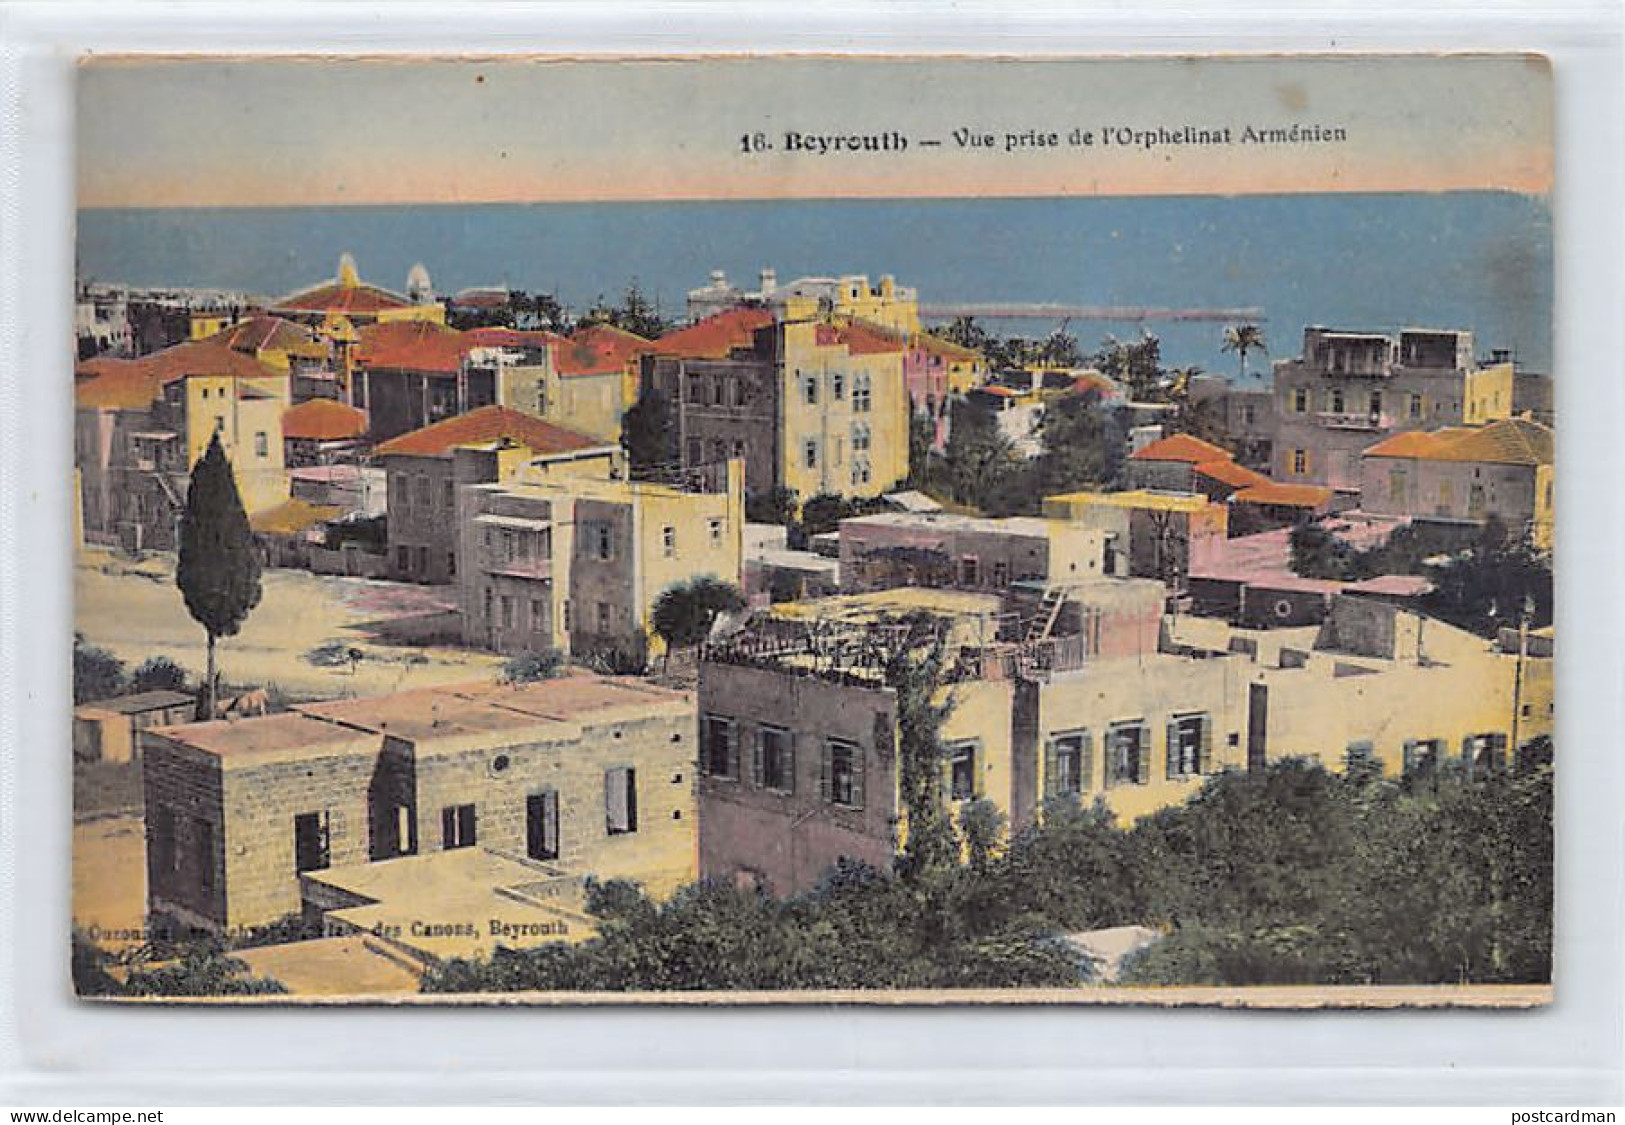 ARMENIANA - View Of The Armenian Orphanage In Beirut, Lebanon - Publ. Ouzoumanian 16 - Armenia